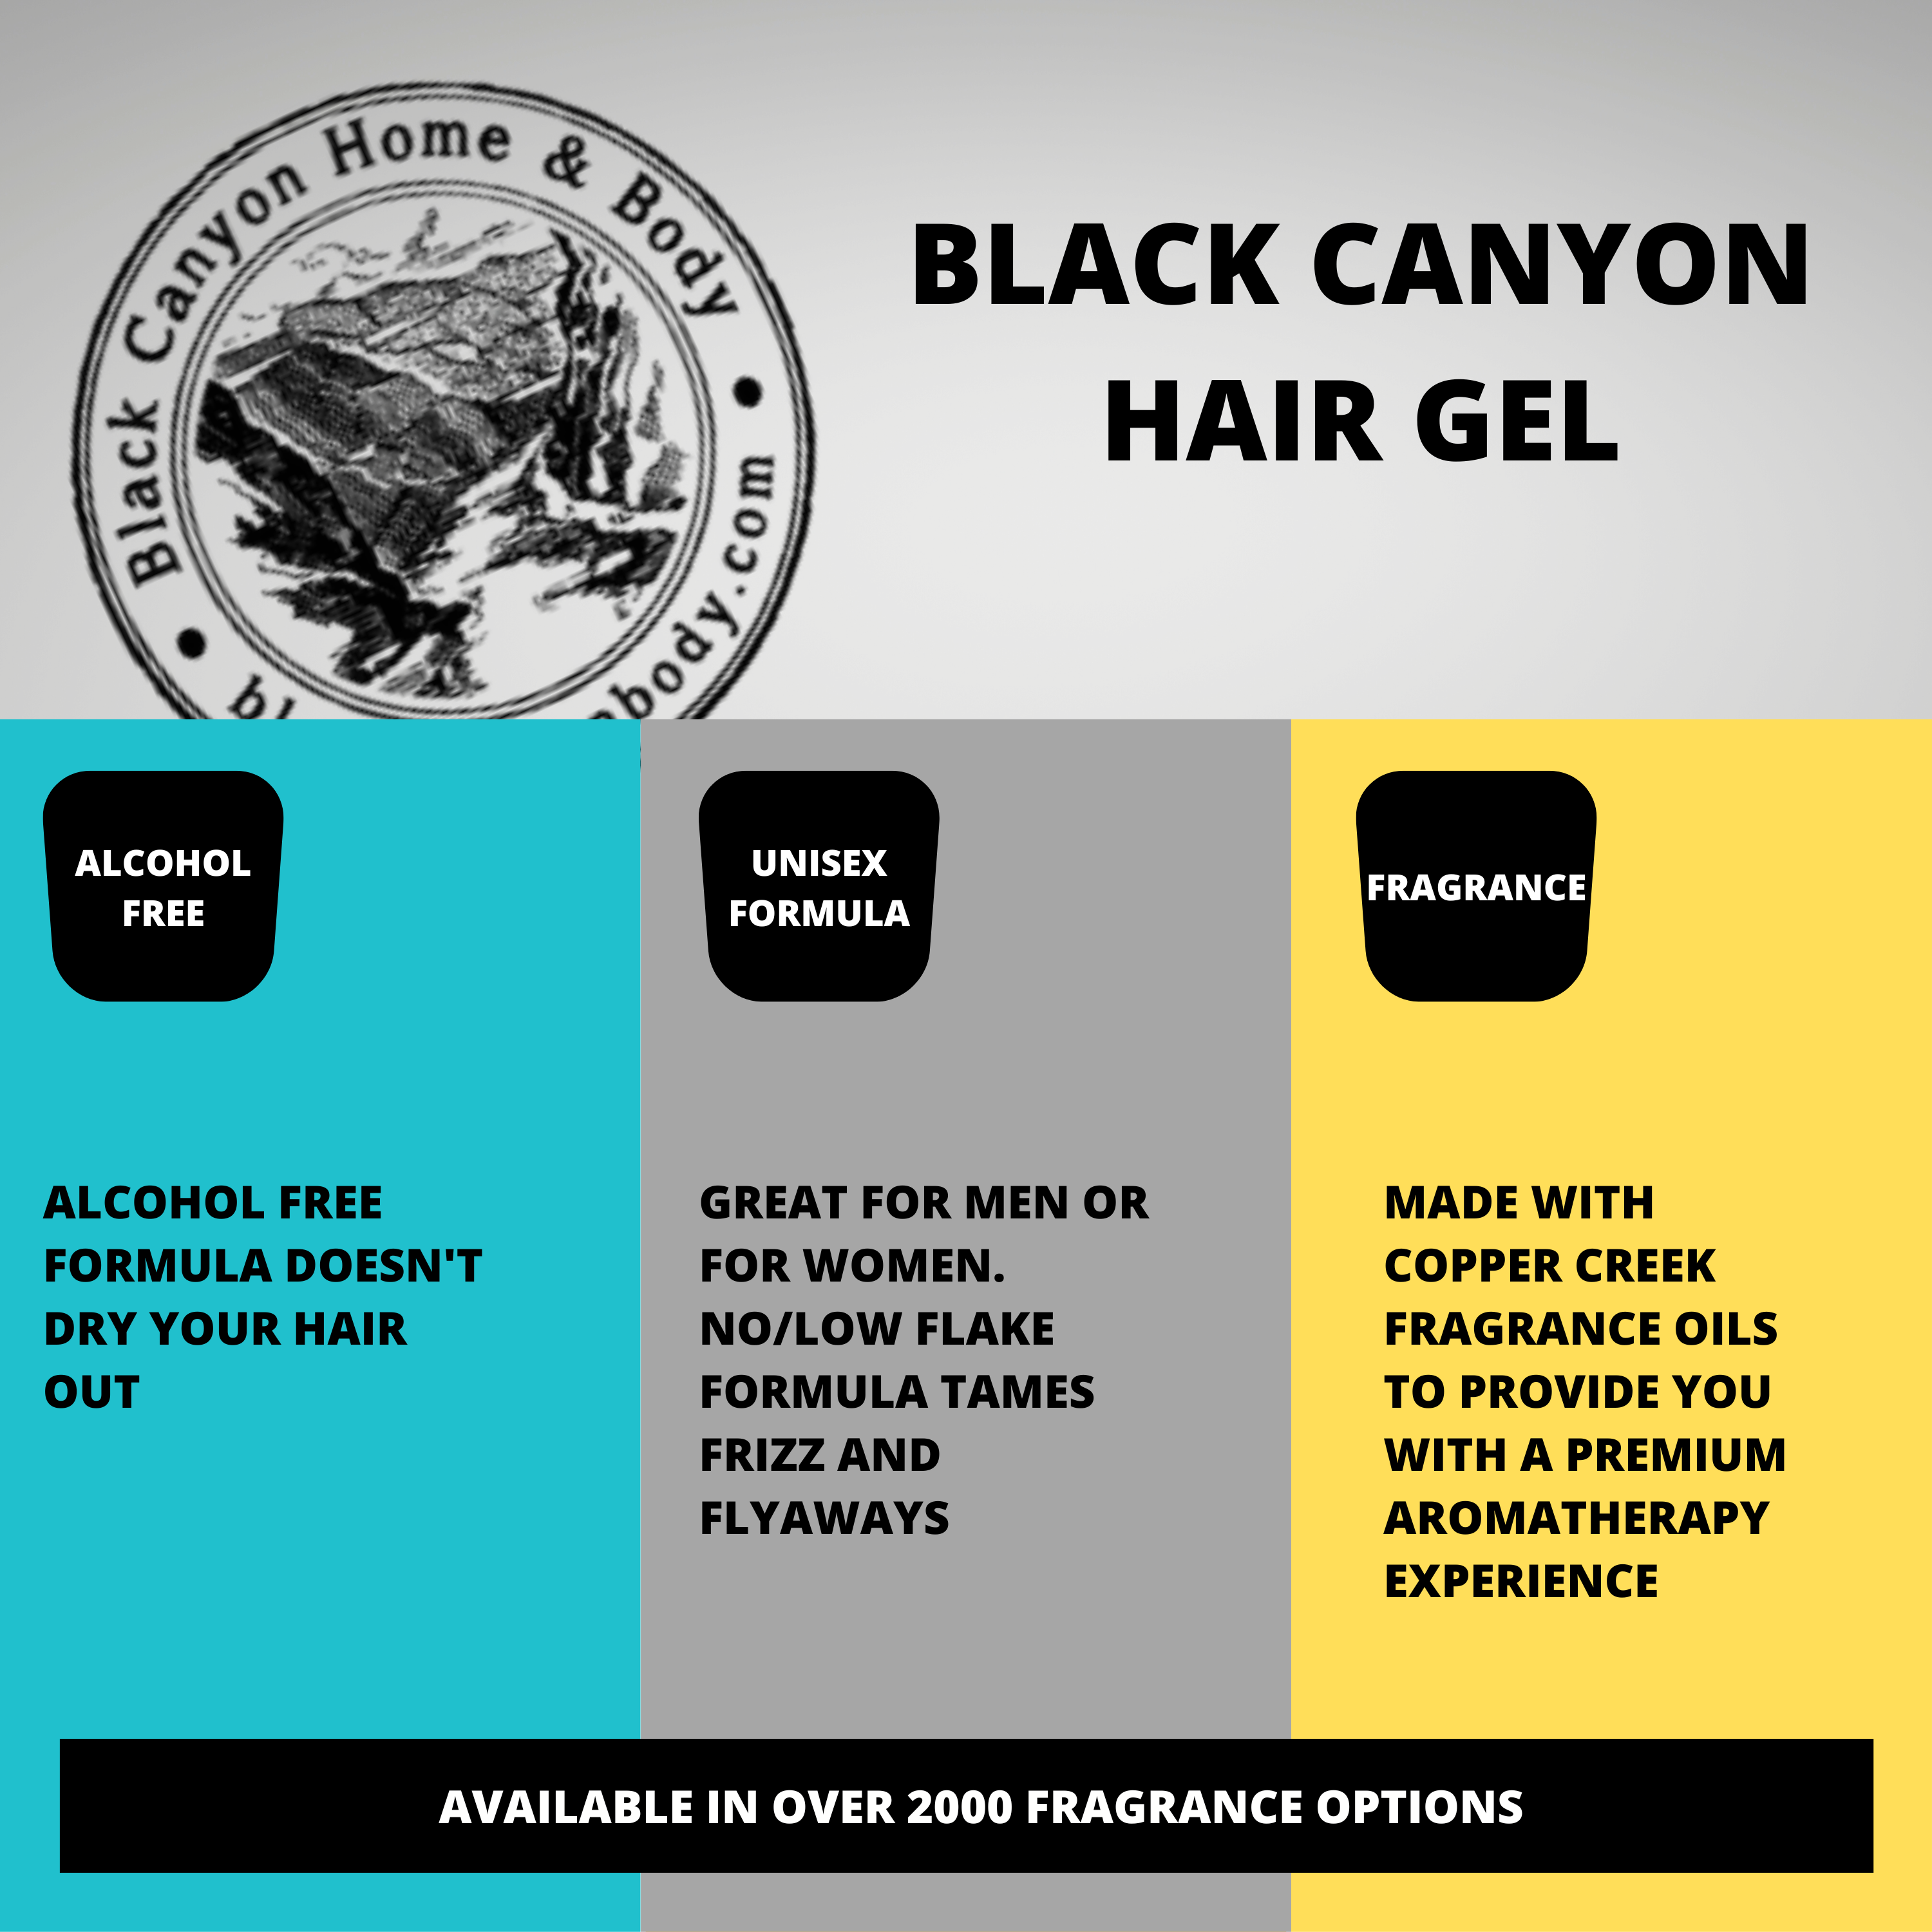 Black Canyon Black Currant & Sandalwood Scented Hair Gel